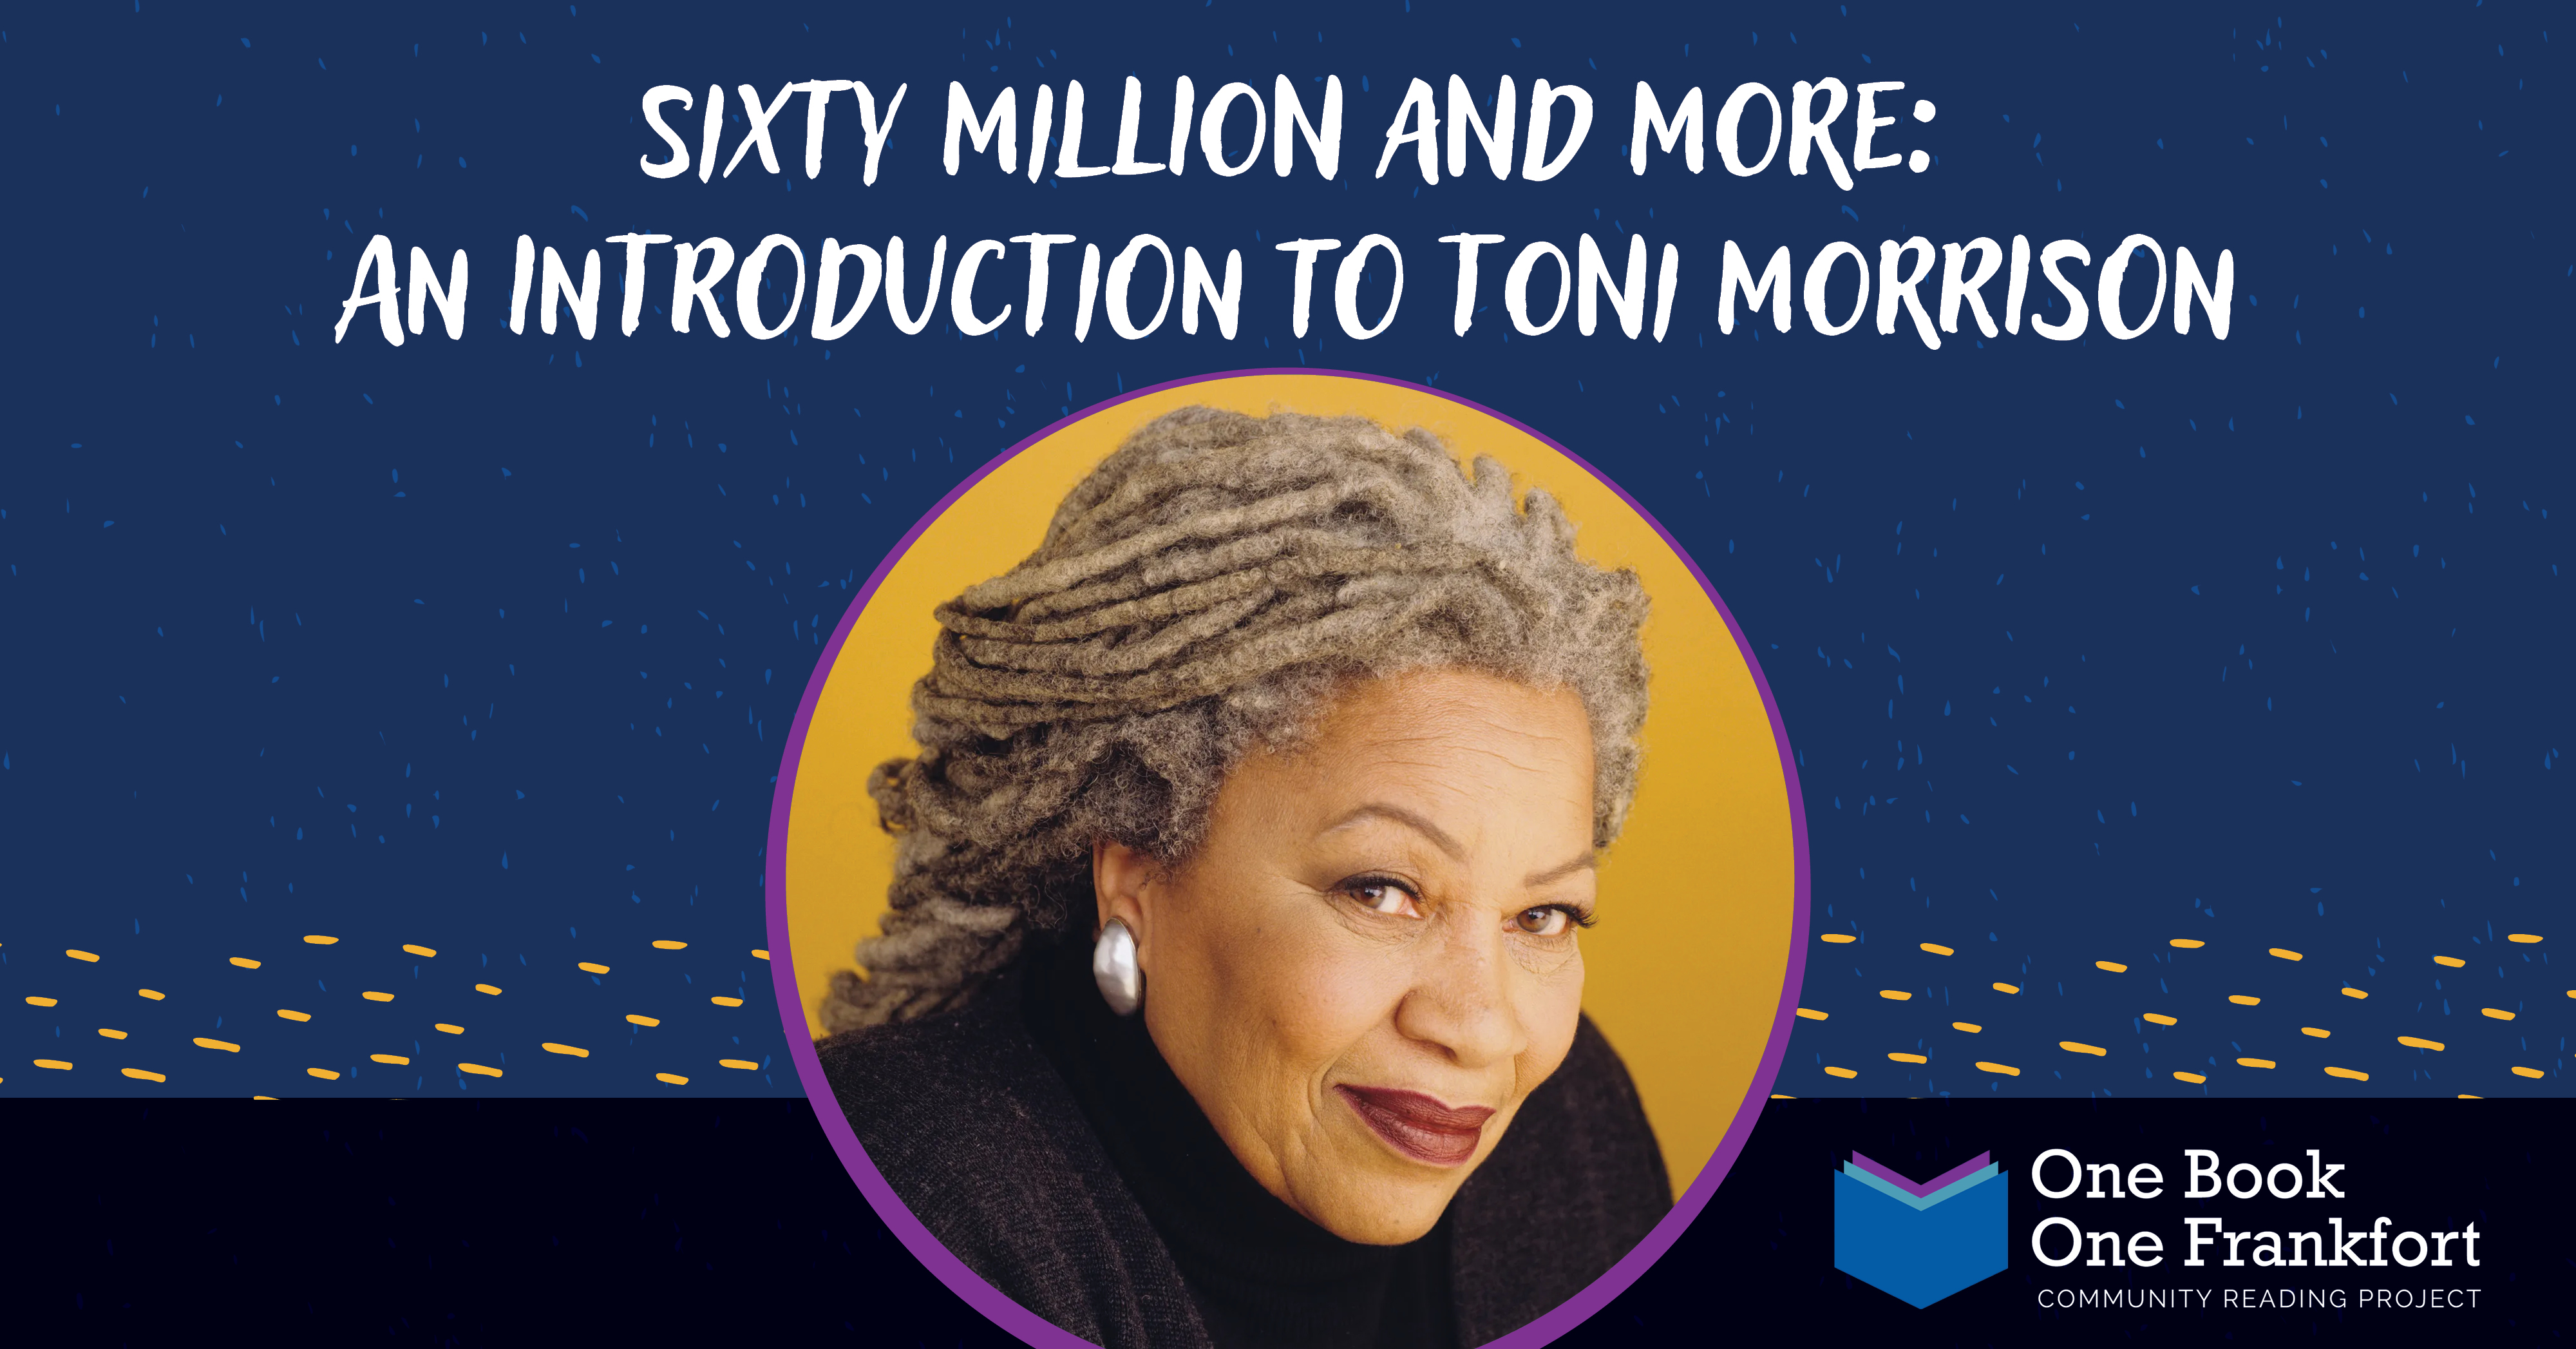 Photo of author Toni Morrison